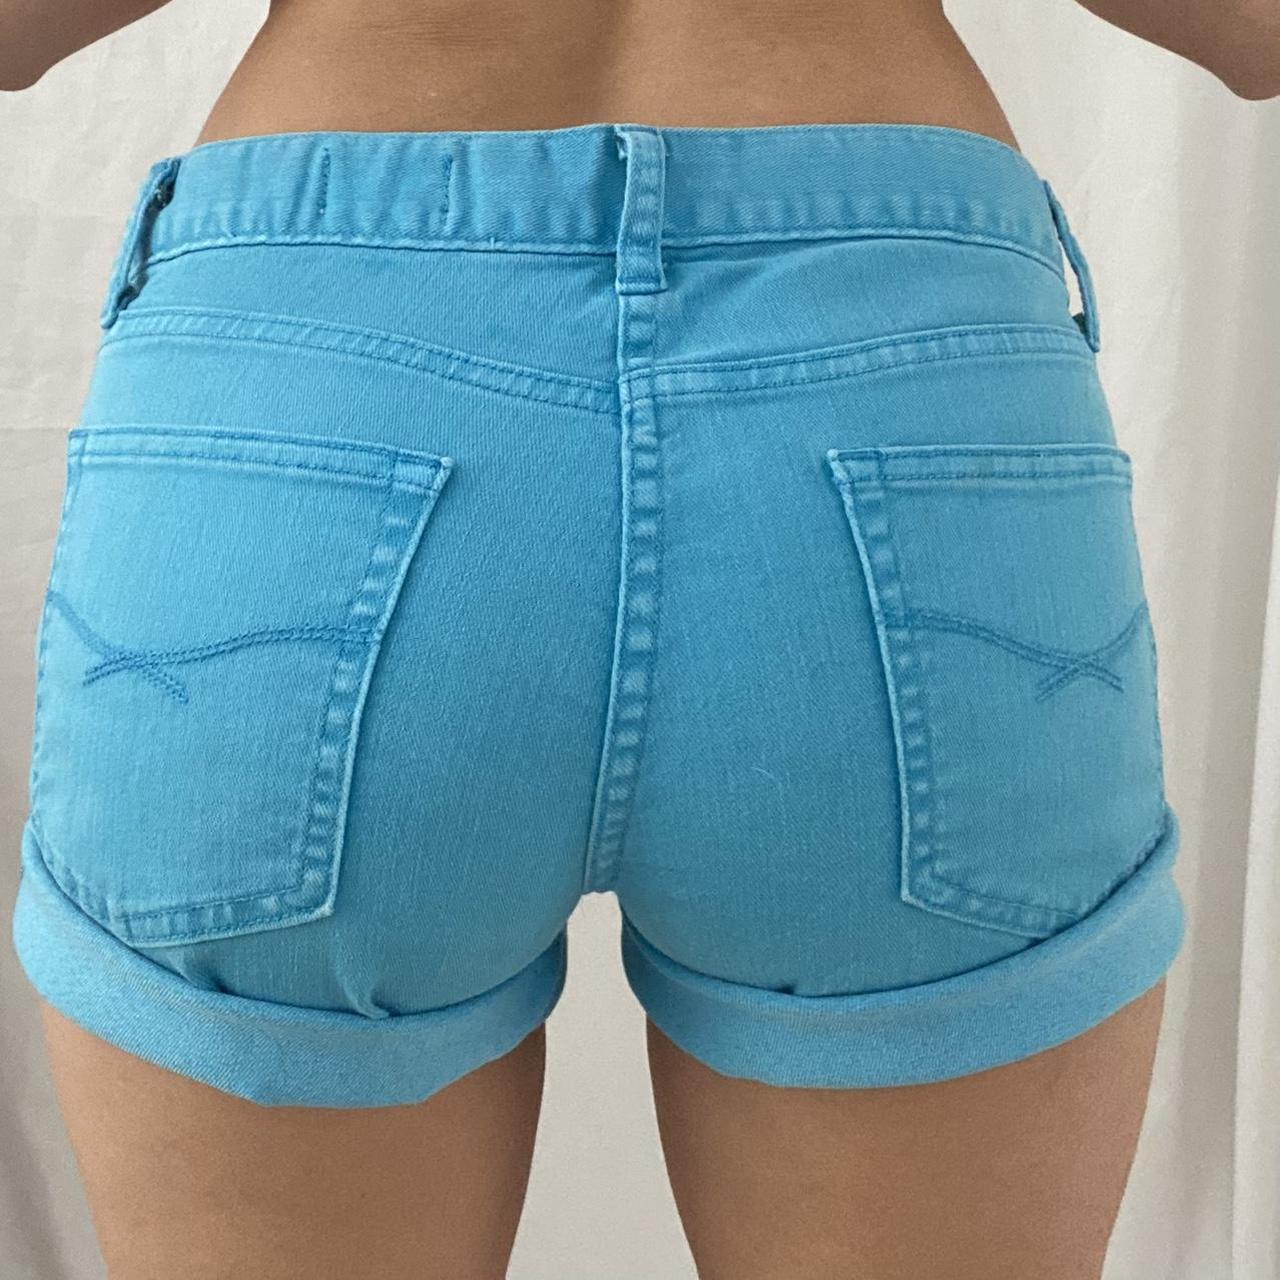 Product Image 2 - 🌐 Bright Blue Gap Shorts